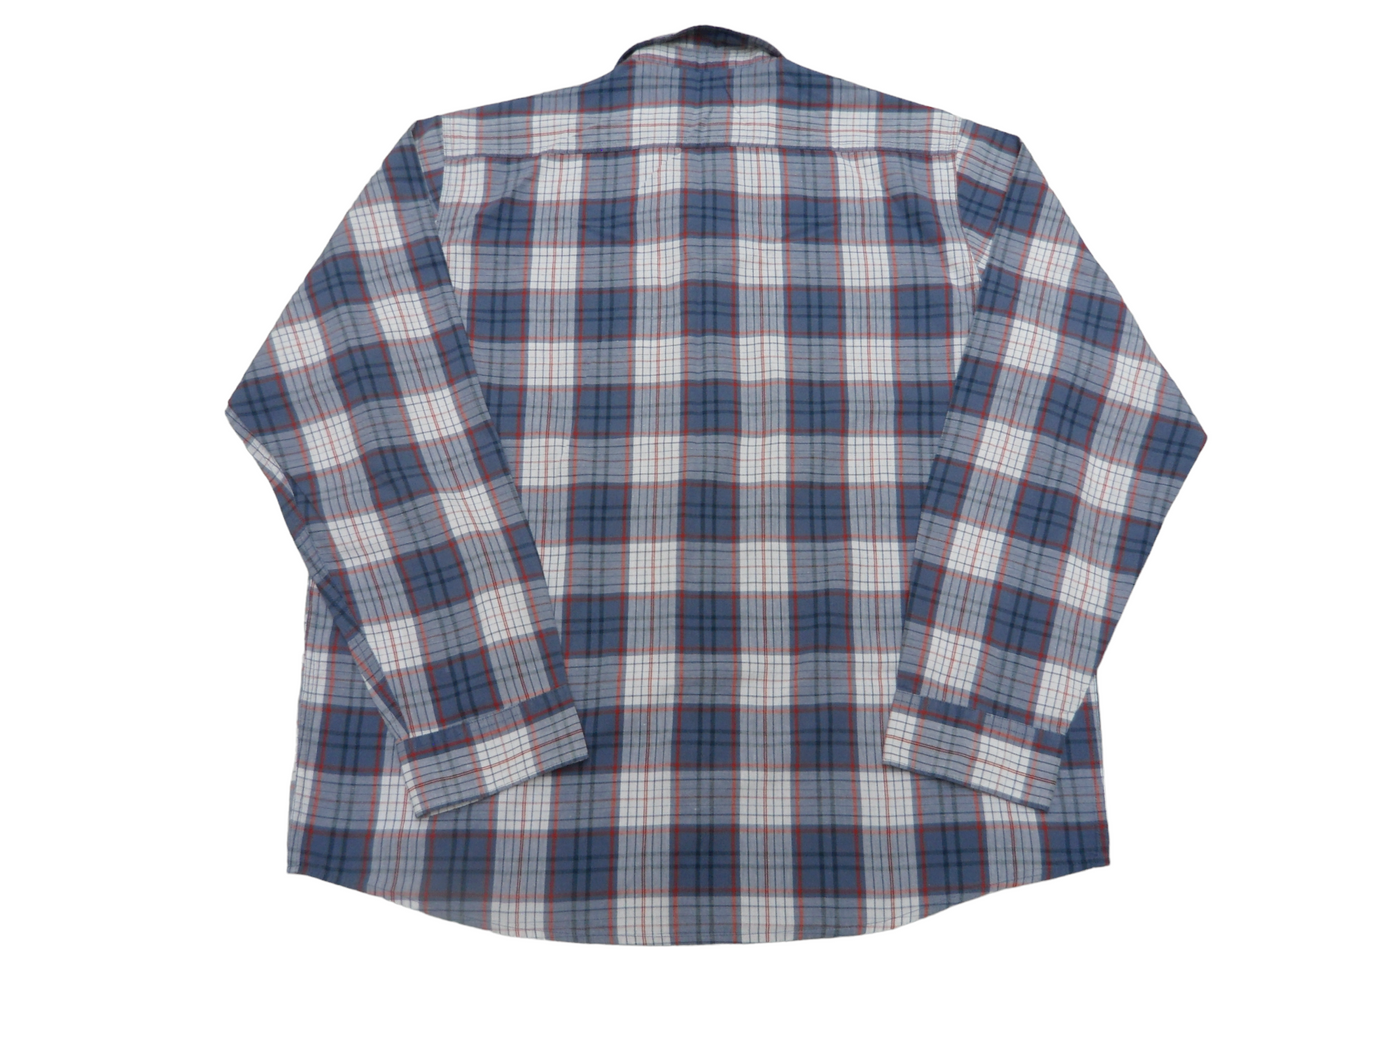 Vintage Wrangler Men's Blue Plaid 100% Cotton Long Sleeve Shirt, X-Large